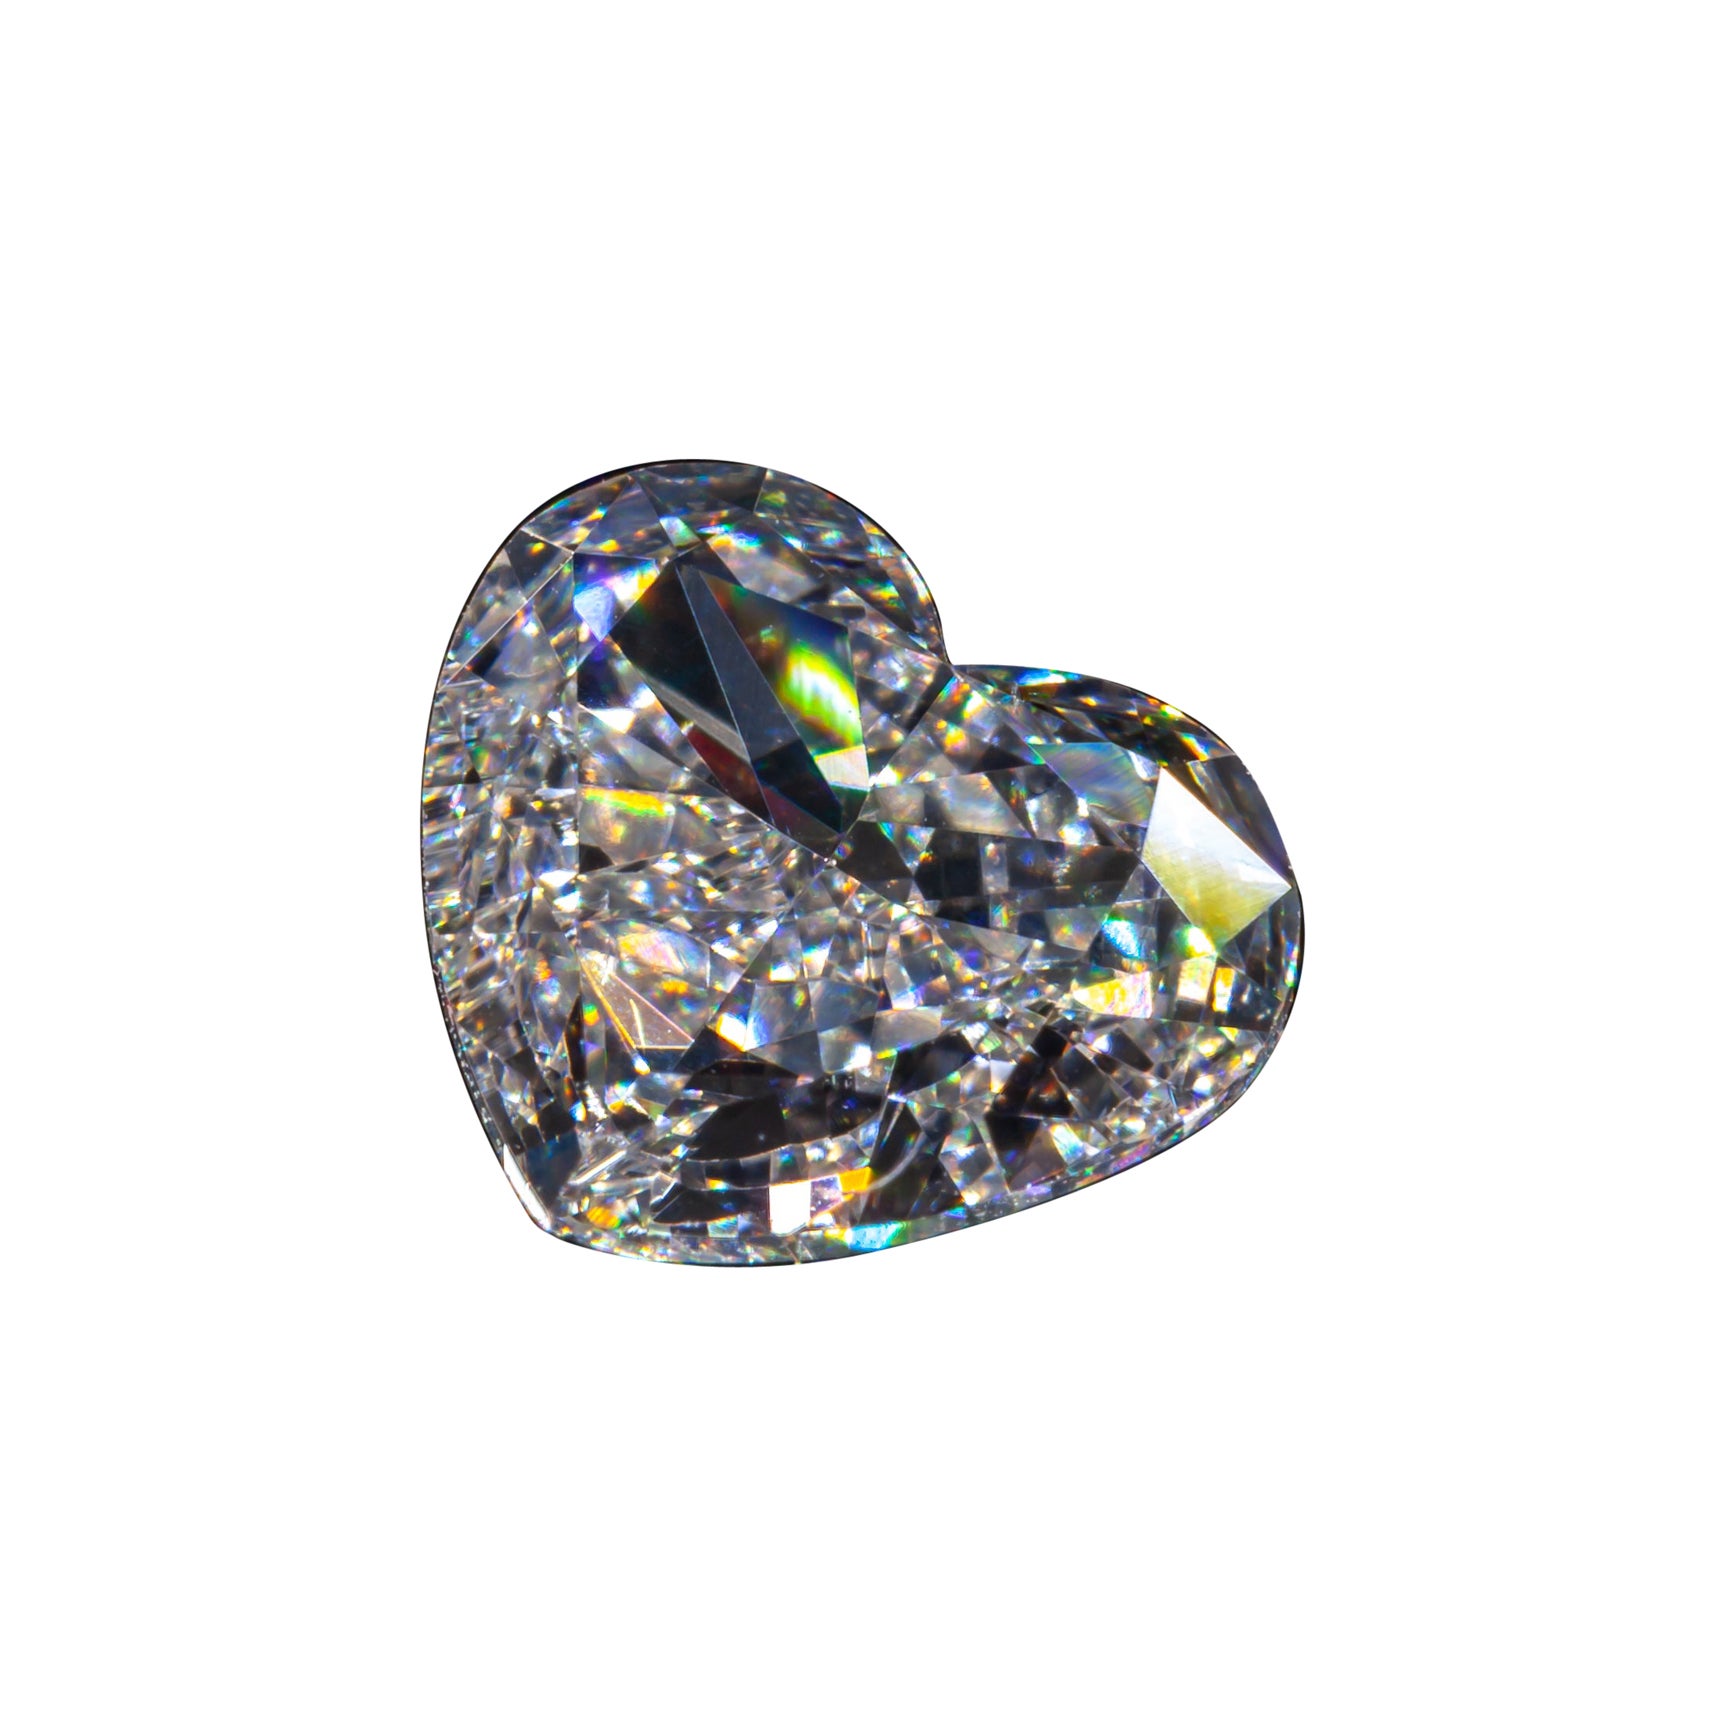 1.00 Carat Loose G / VS2 Heart Shaped Diamond GIA Certified